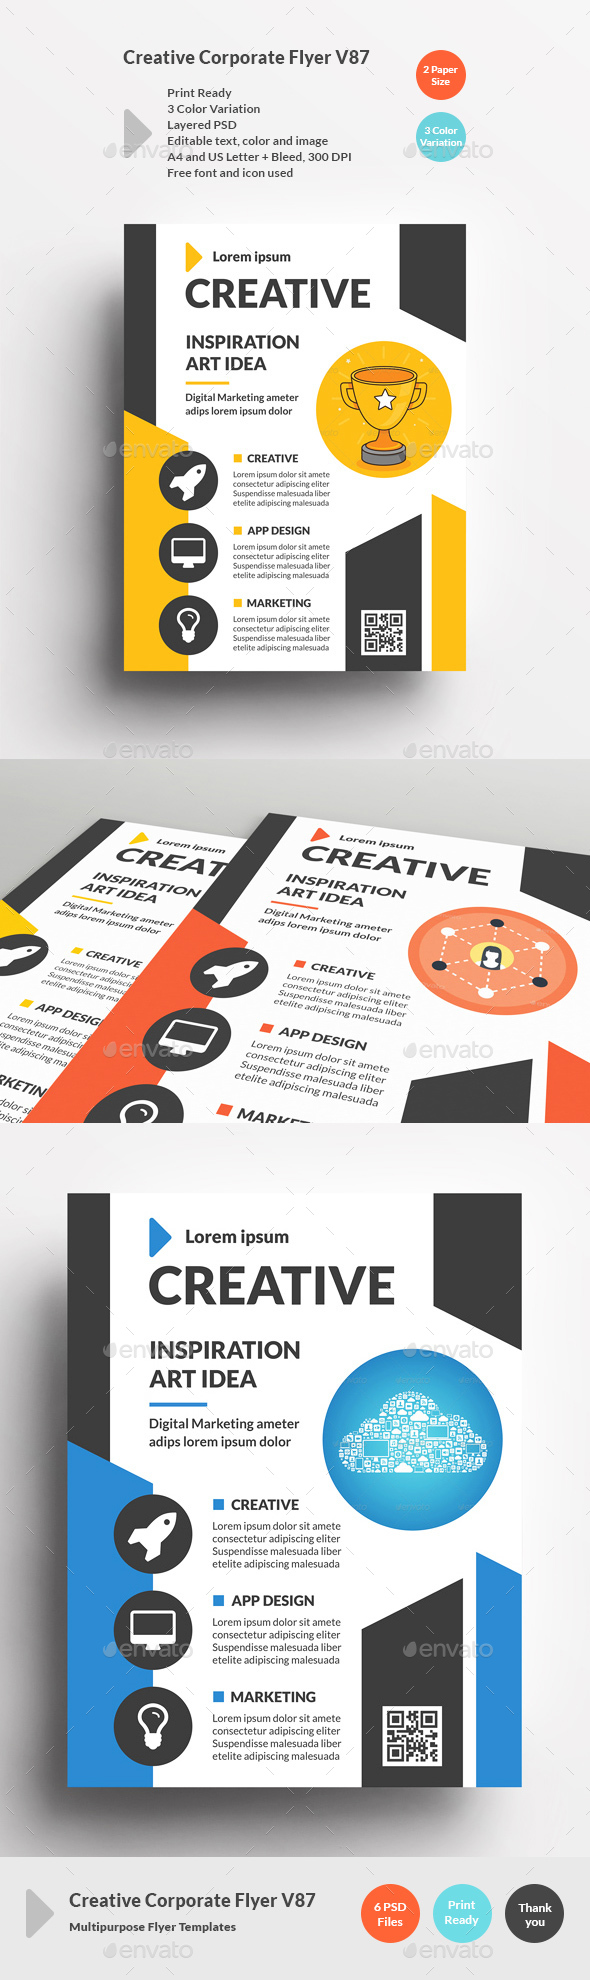 Creative Corporate Flyer V87